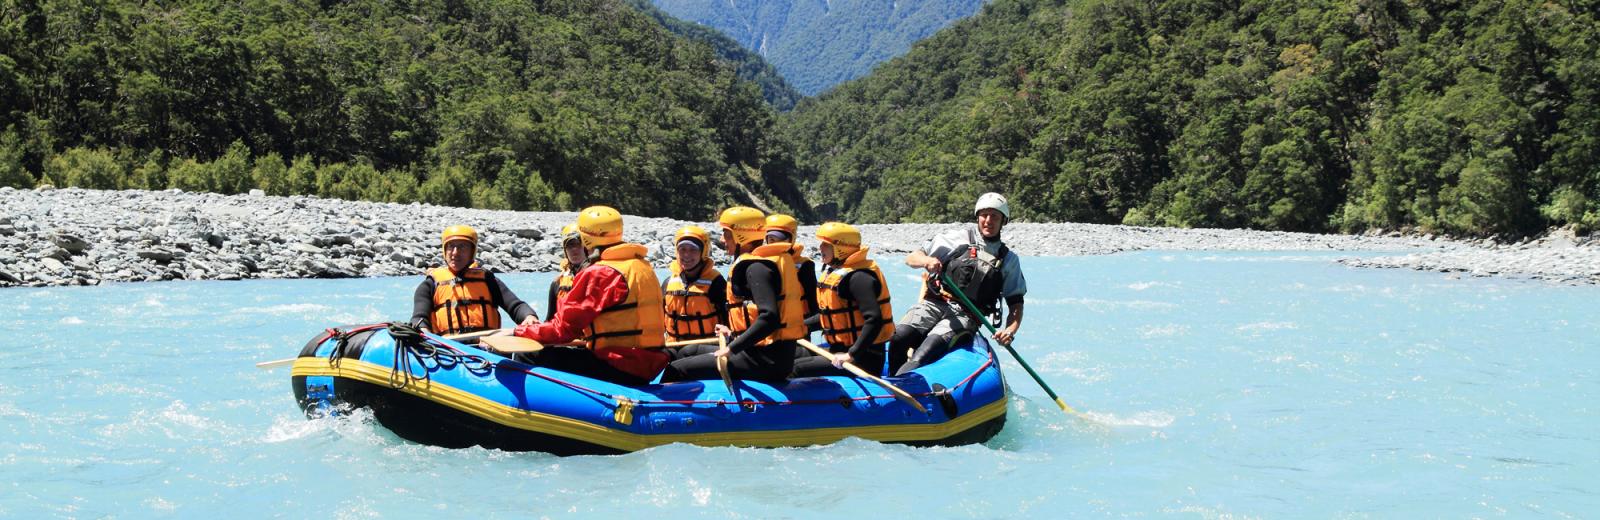 Remote Adventure Rafting New Zealand